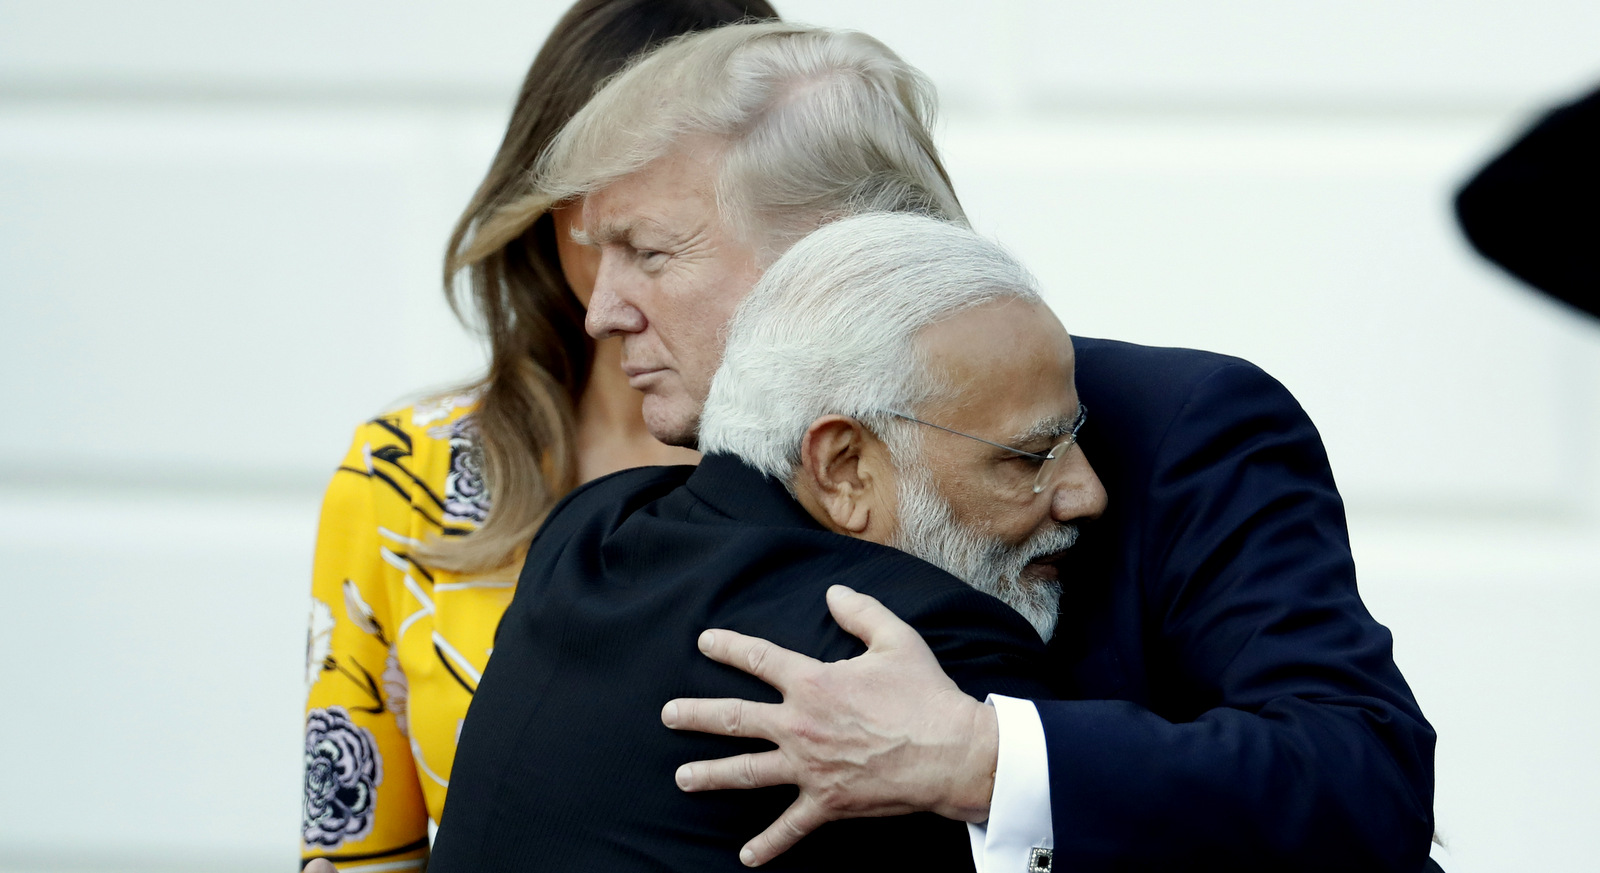  Indian Prime Minister Narendra Modi hugs President Donald Trump at the White House in Washington, June 26, 2017.  (AP/Alex Brandon)